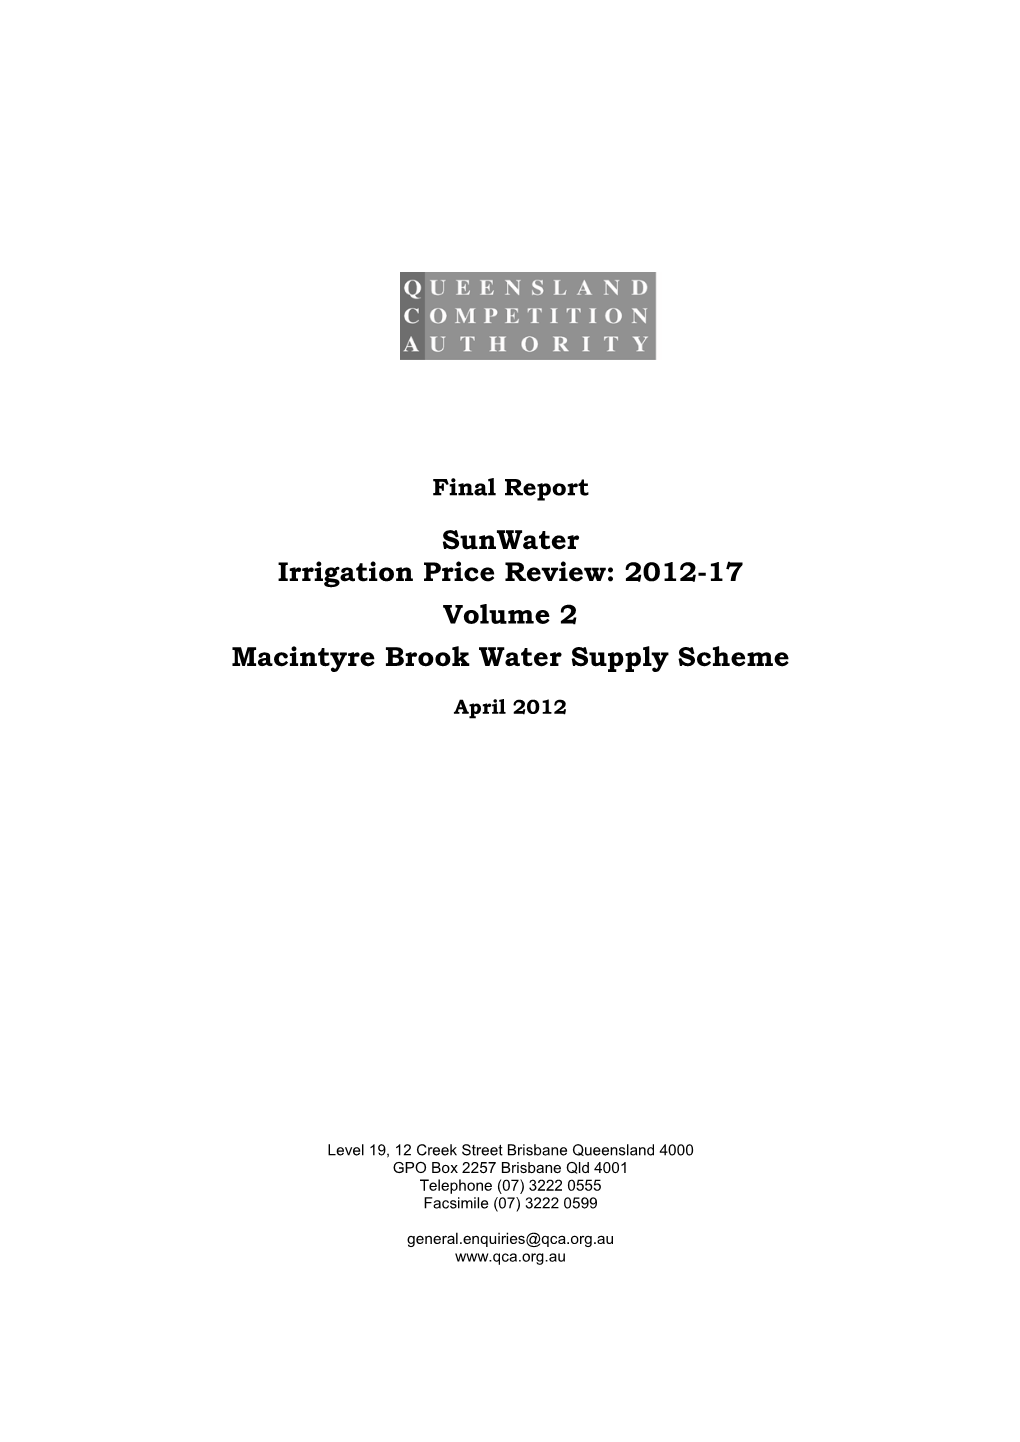 Sunwater Irrigation Price Review: 2012-17 Volume 2 Macintyre Brook Water Supply Scheme